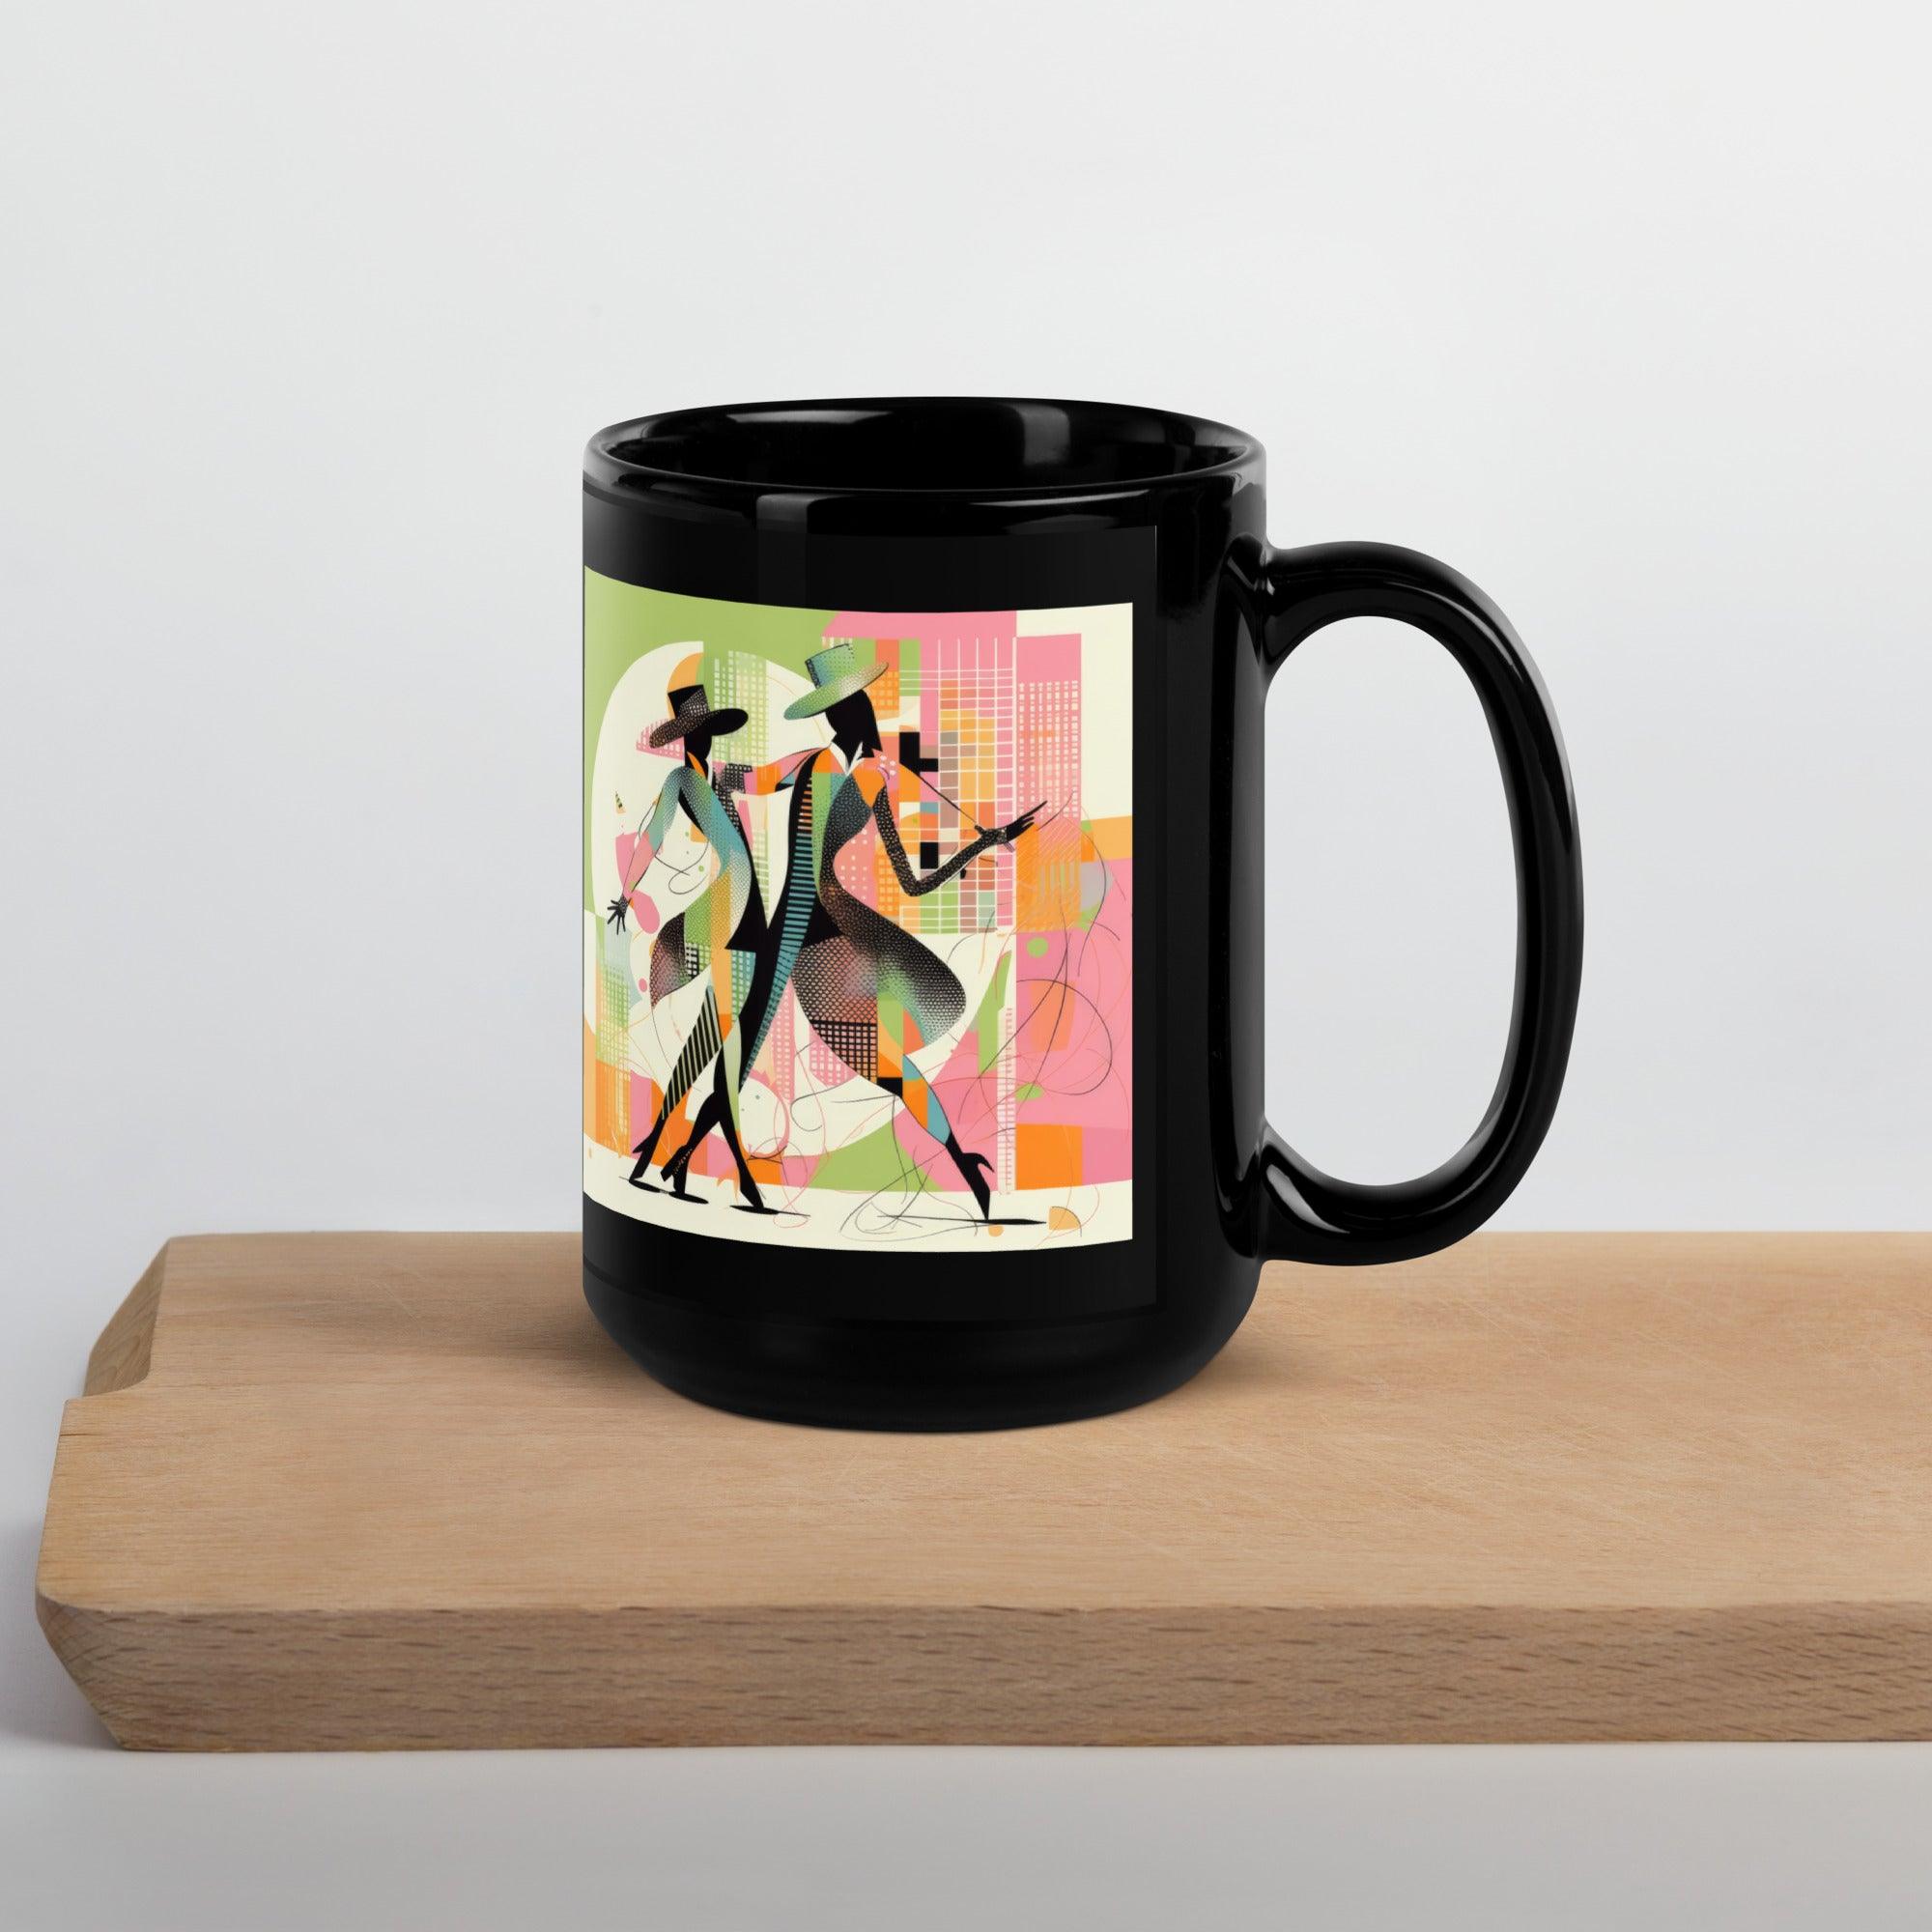 Elegant black mug featuring women’s dance artwork.